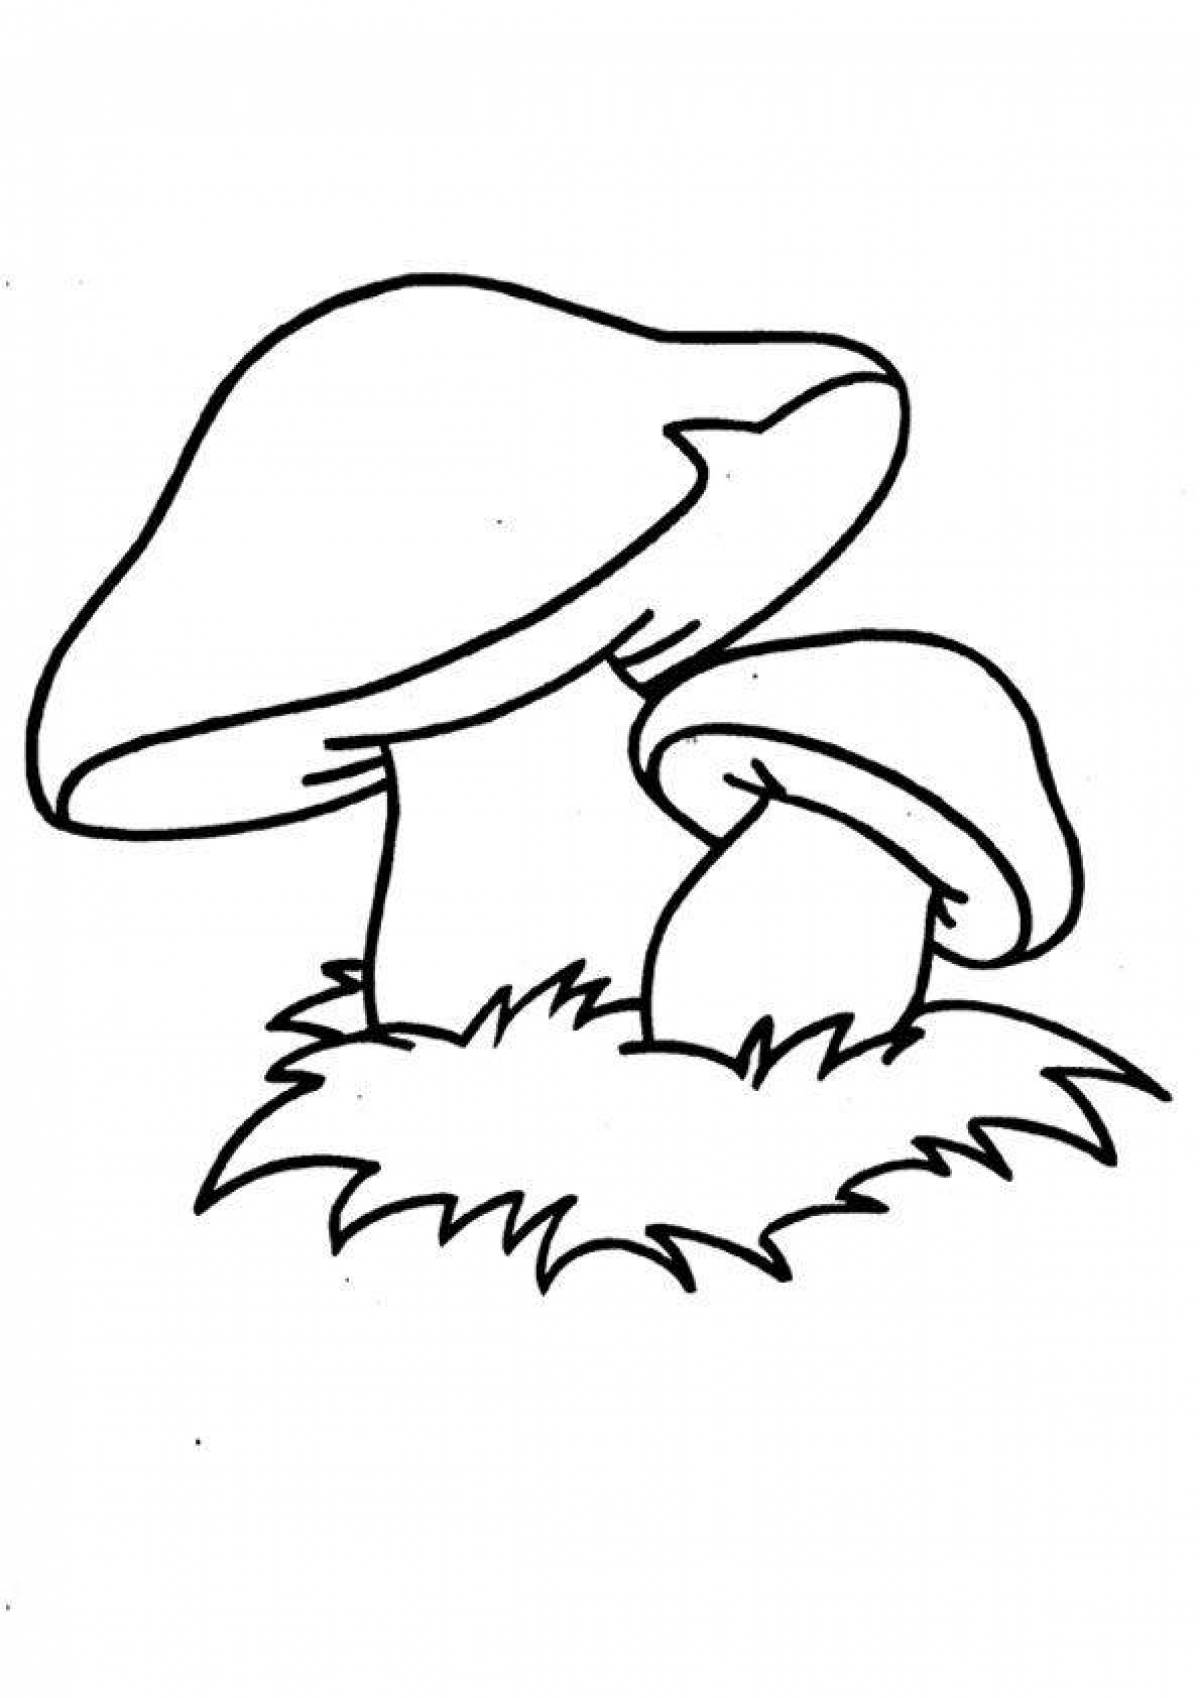 Coloring book happy mushroom for kids